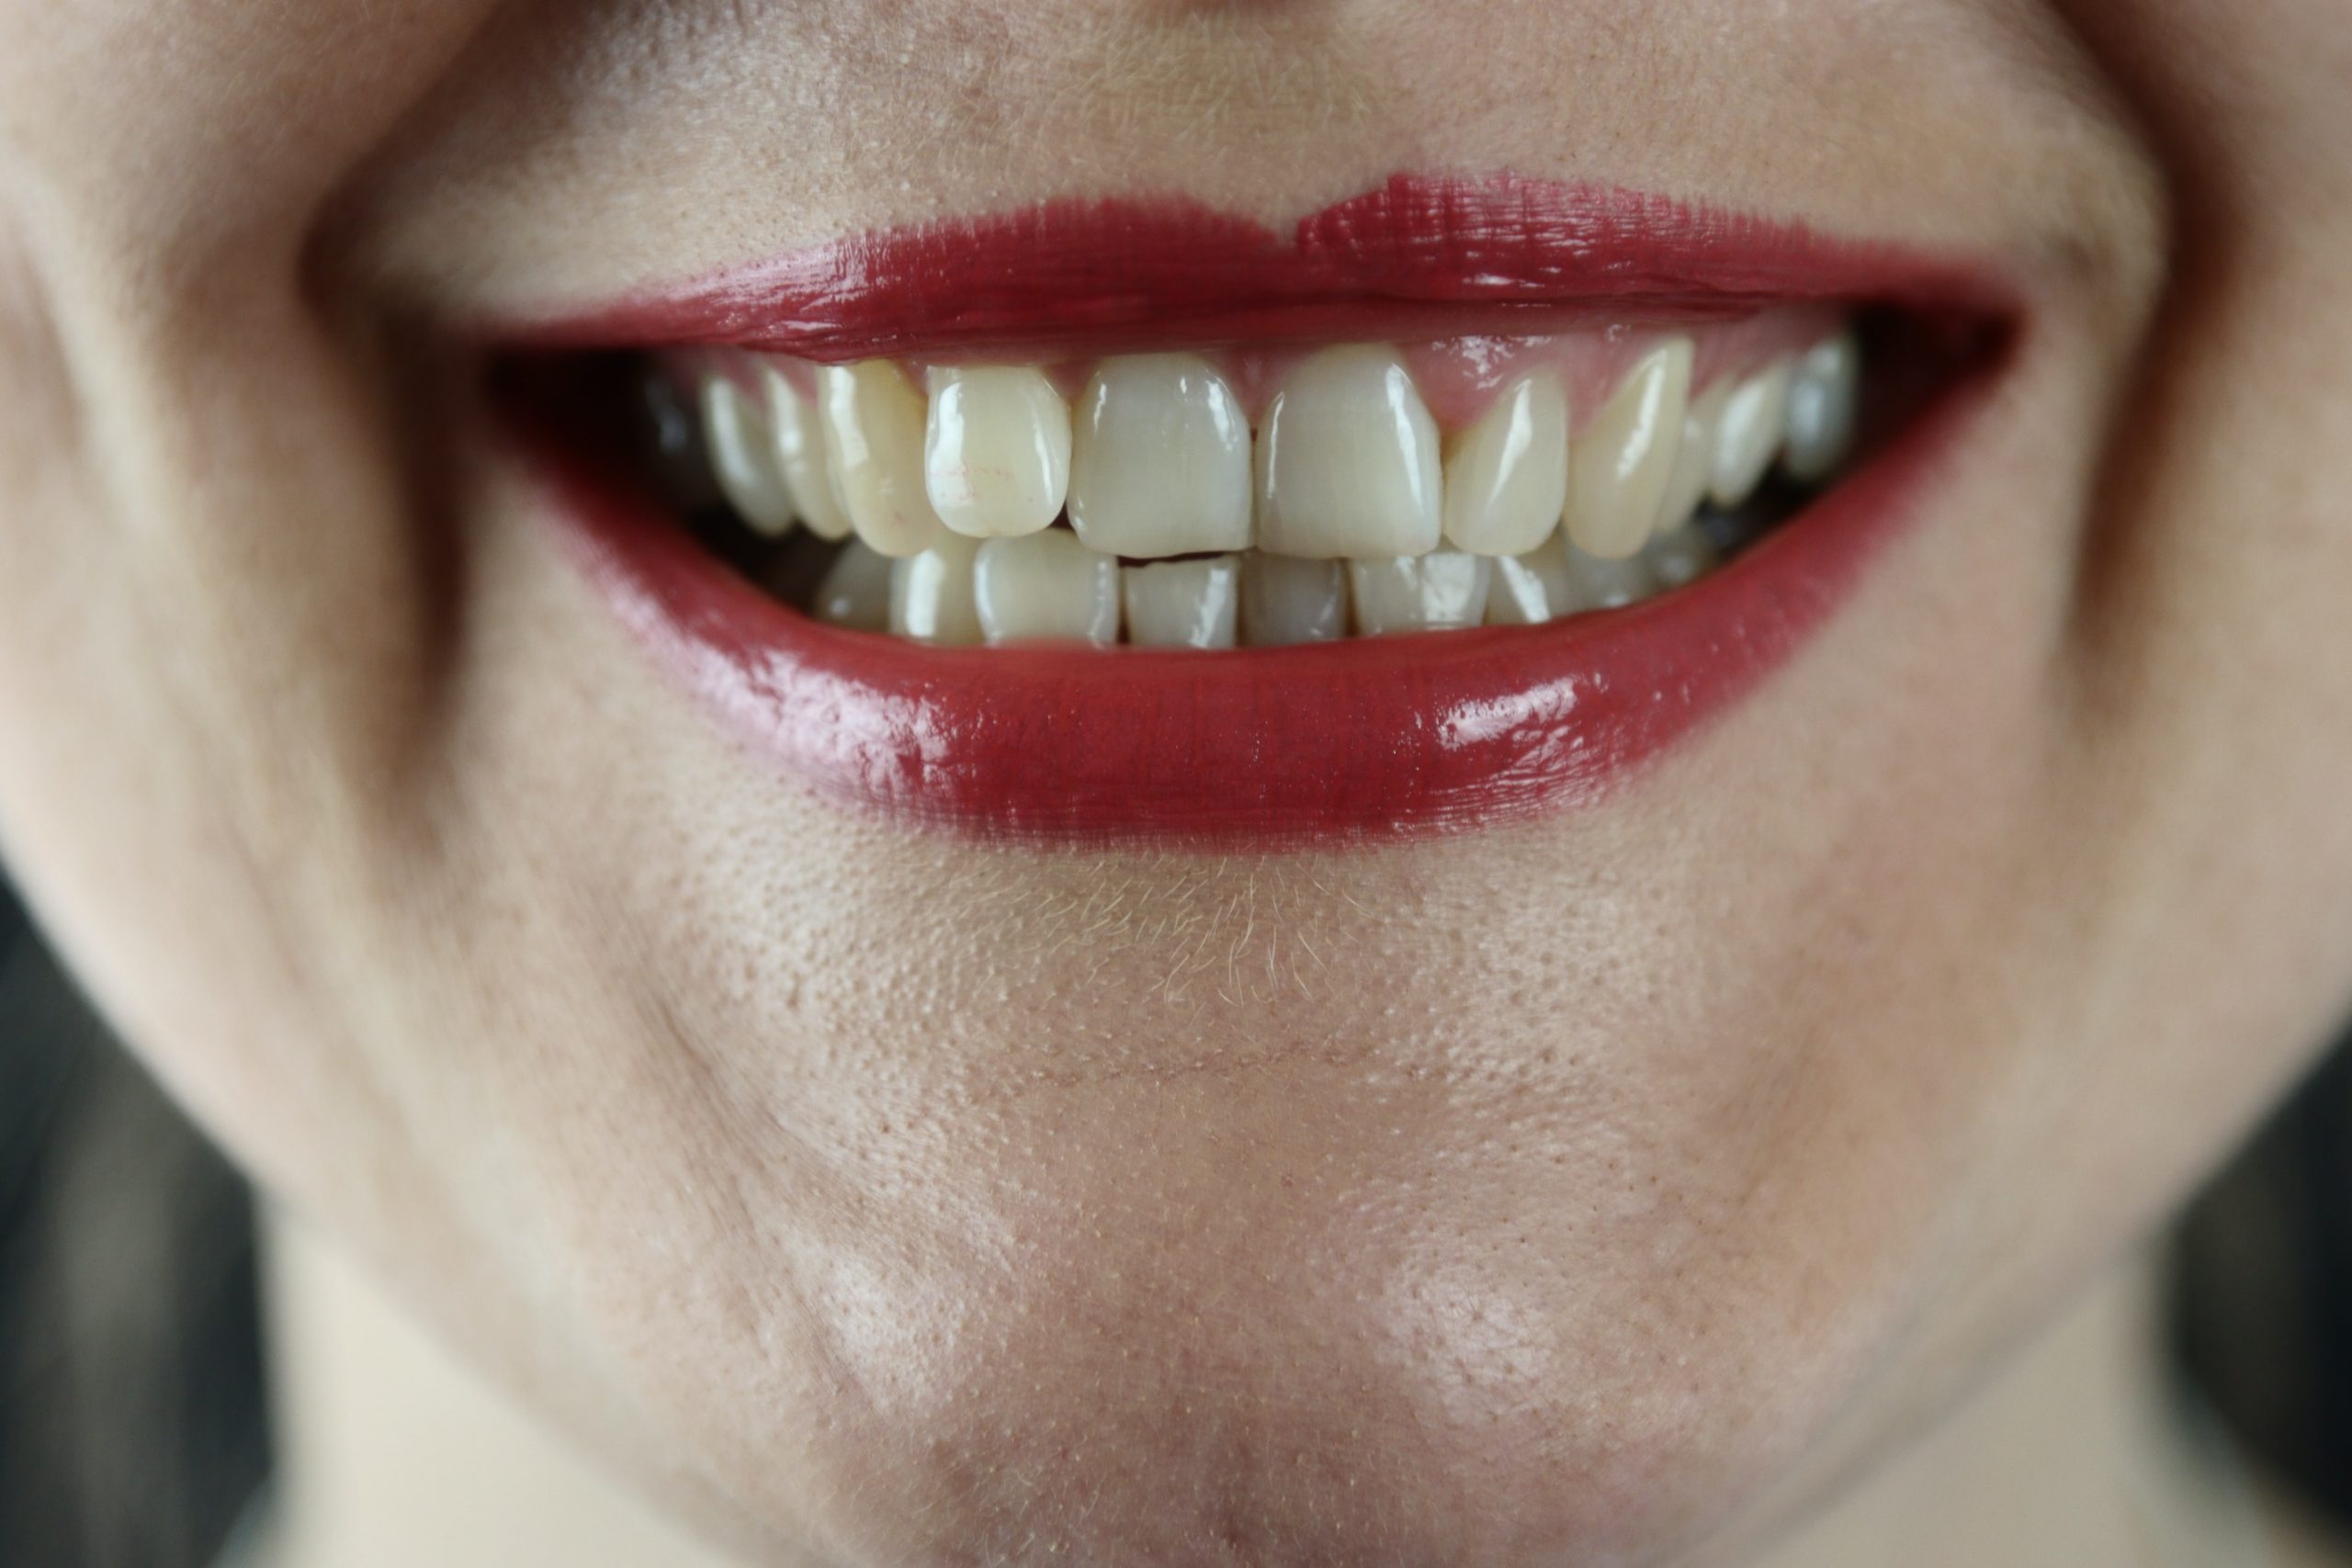 A smiling set of teeth